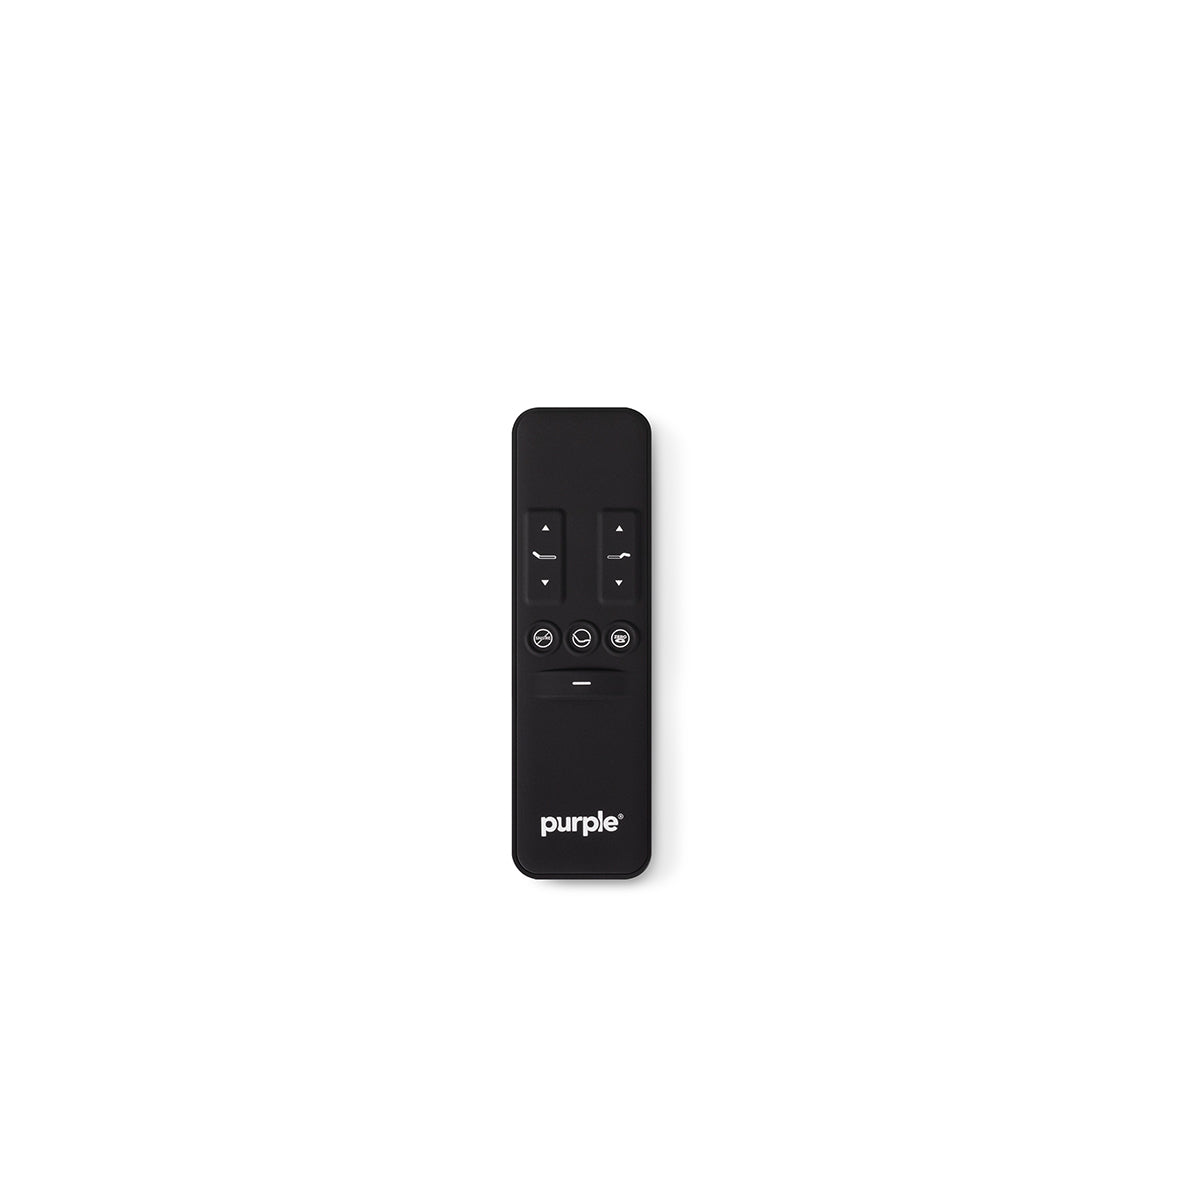 Purple Premium Smart Adjustable Base remote